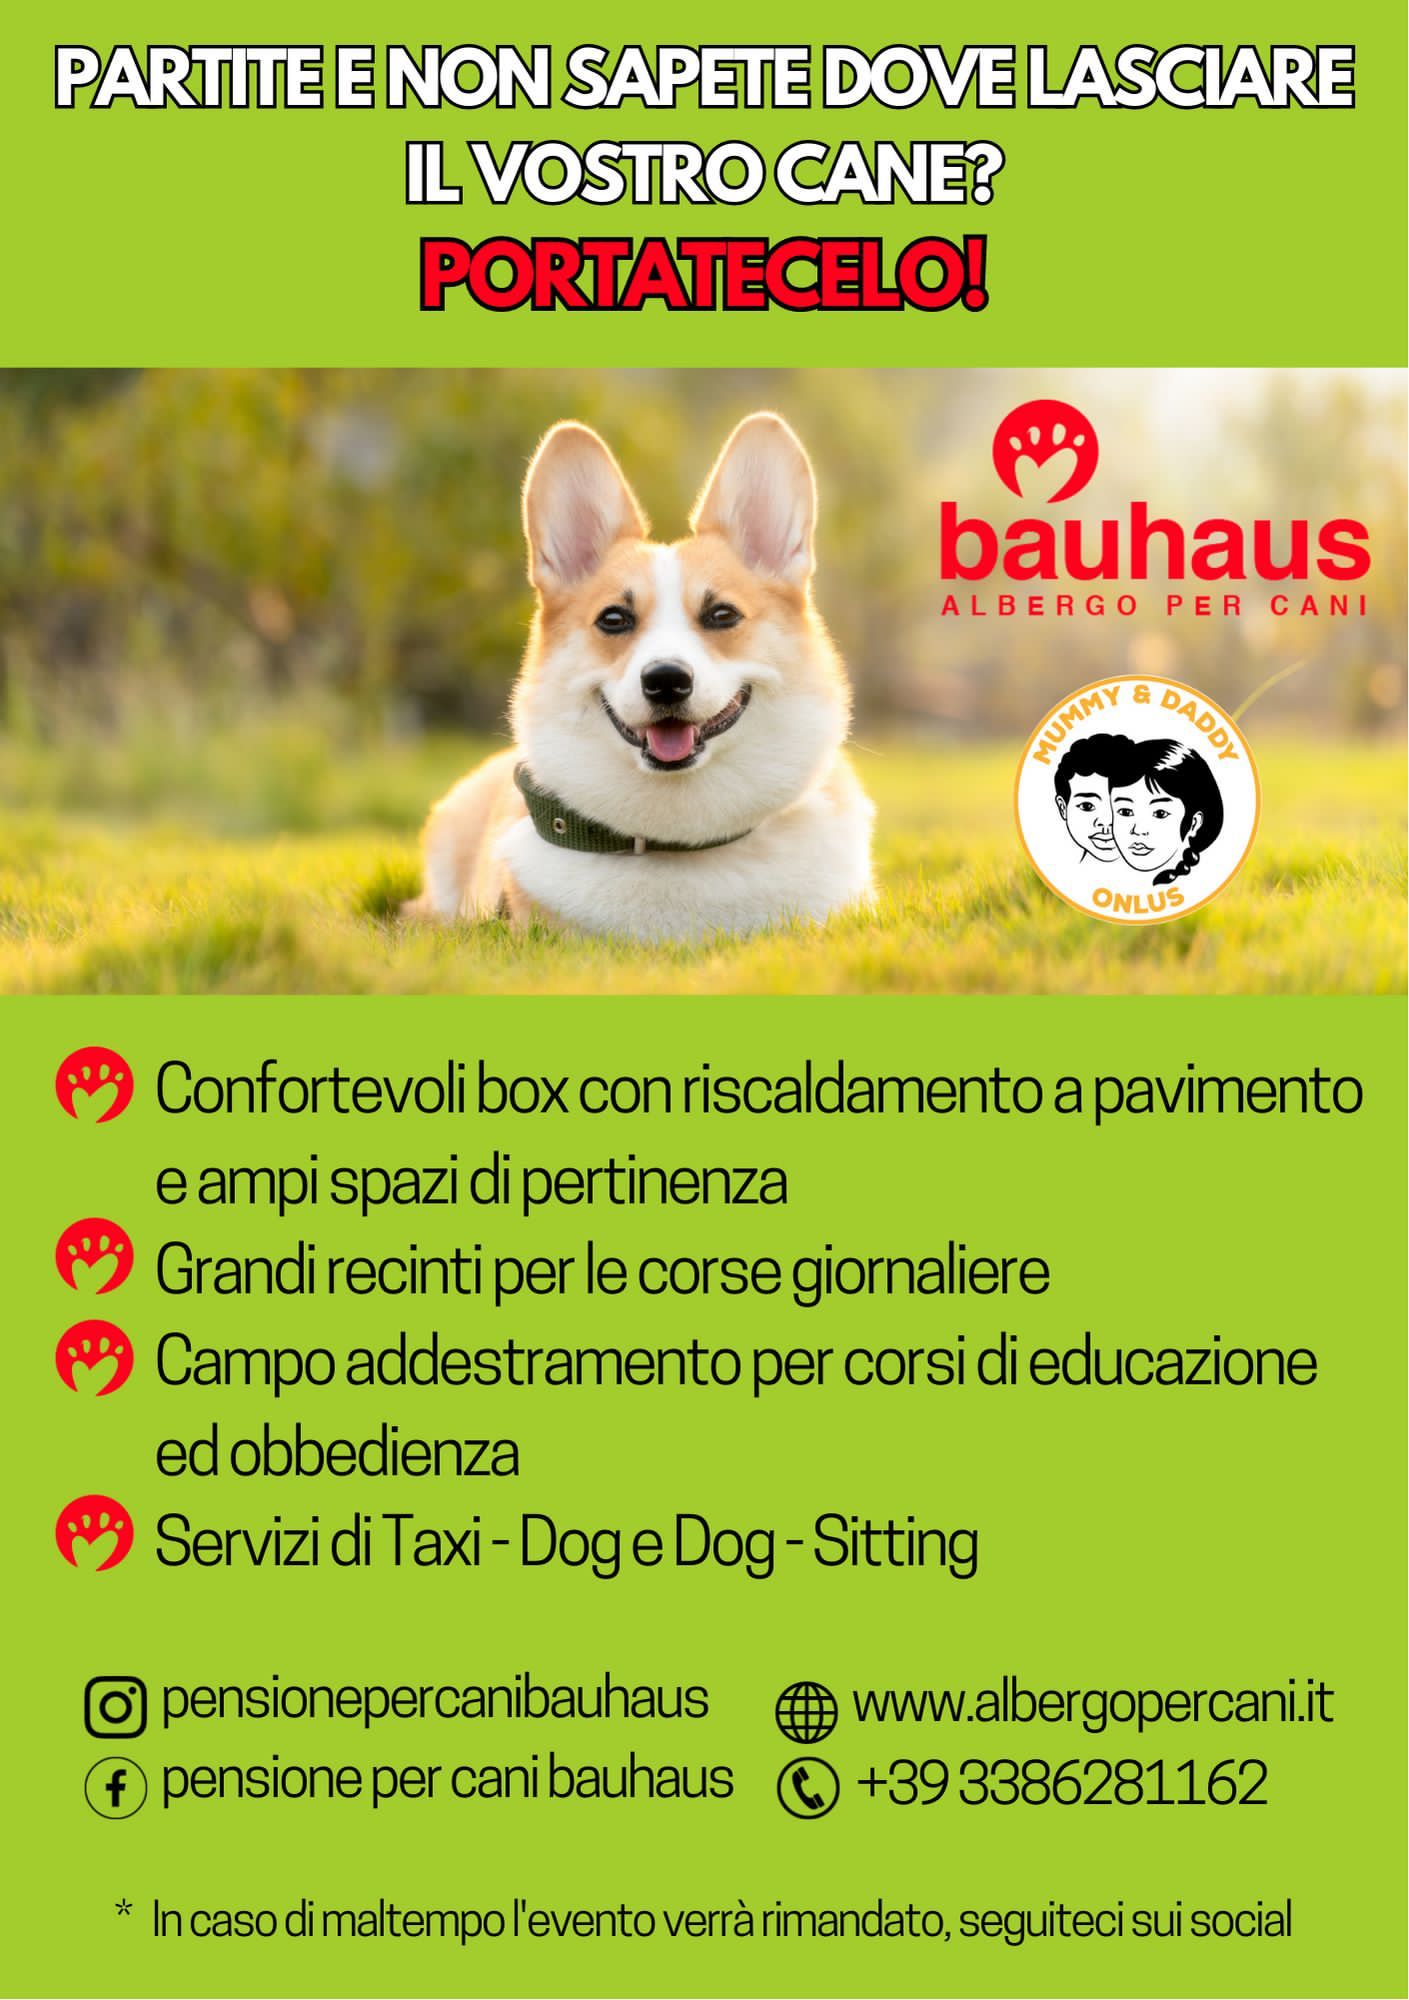 Bauhaus-albergo-per-cani-Veneto-Cimadolmo-dog-party